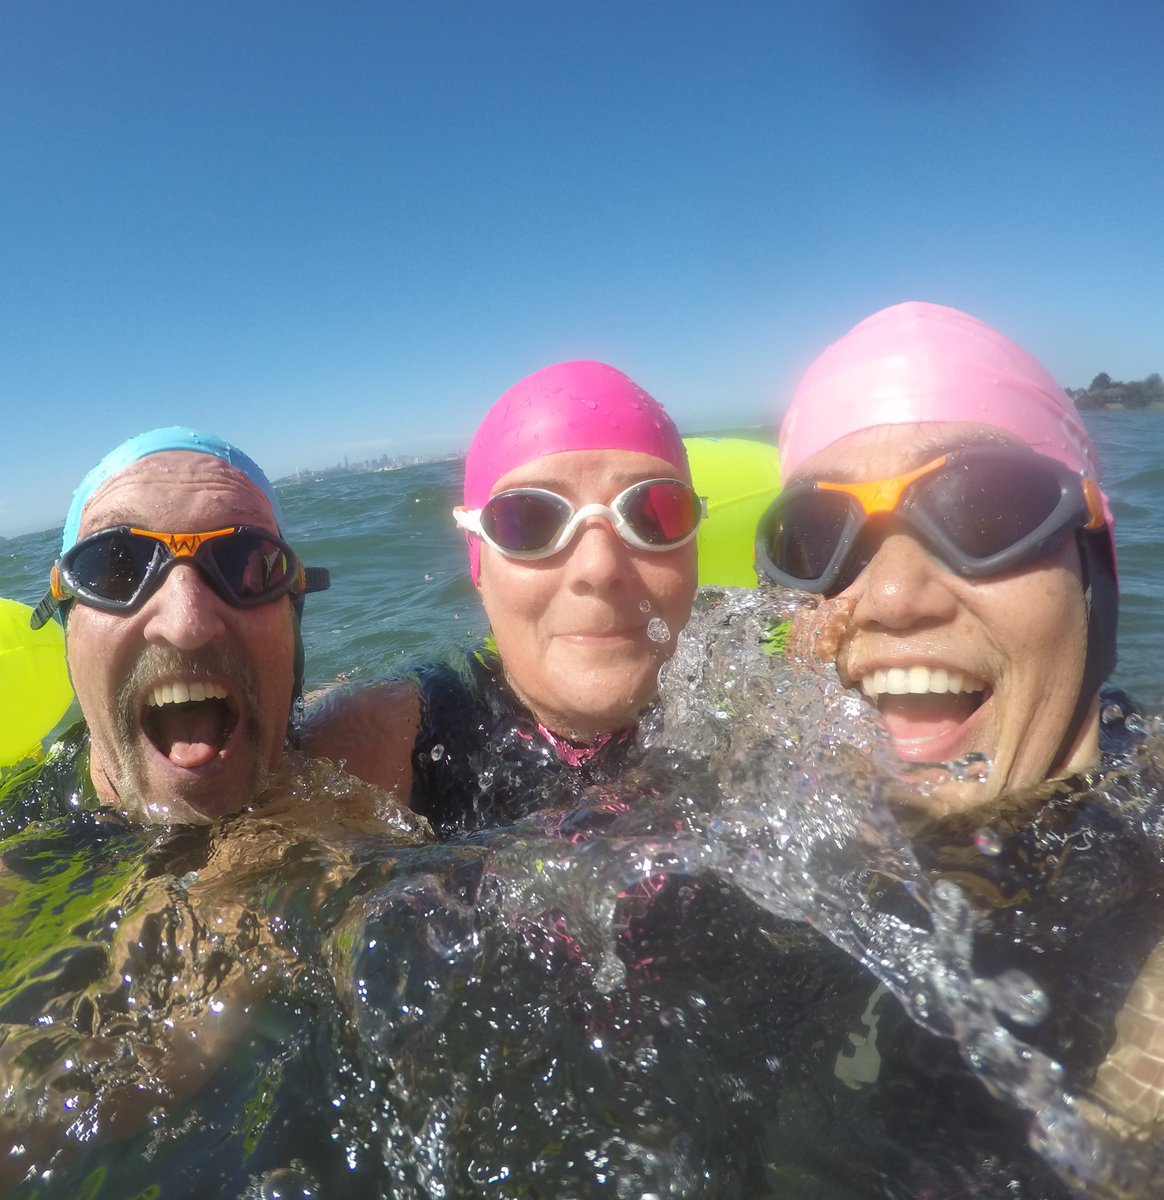 Sunday fun in the Bay! 

#openwaterswimming #wildswimming #selfie #buoyselfie #swimming